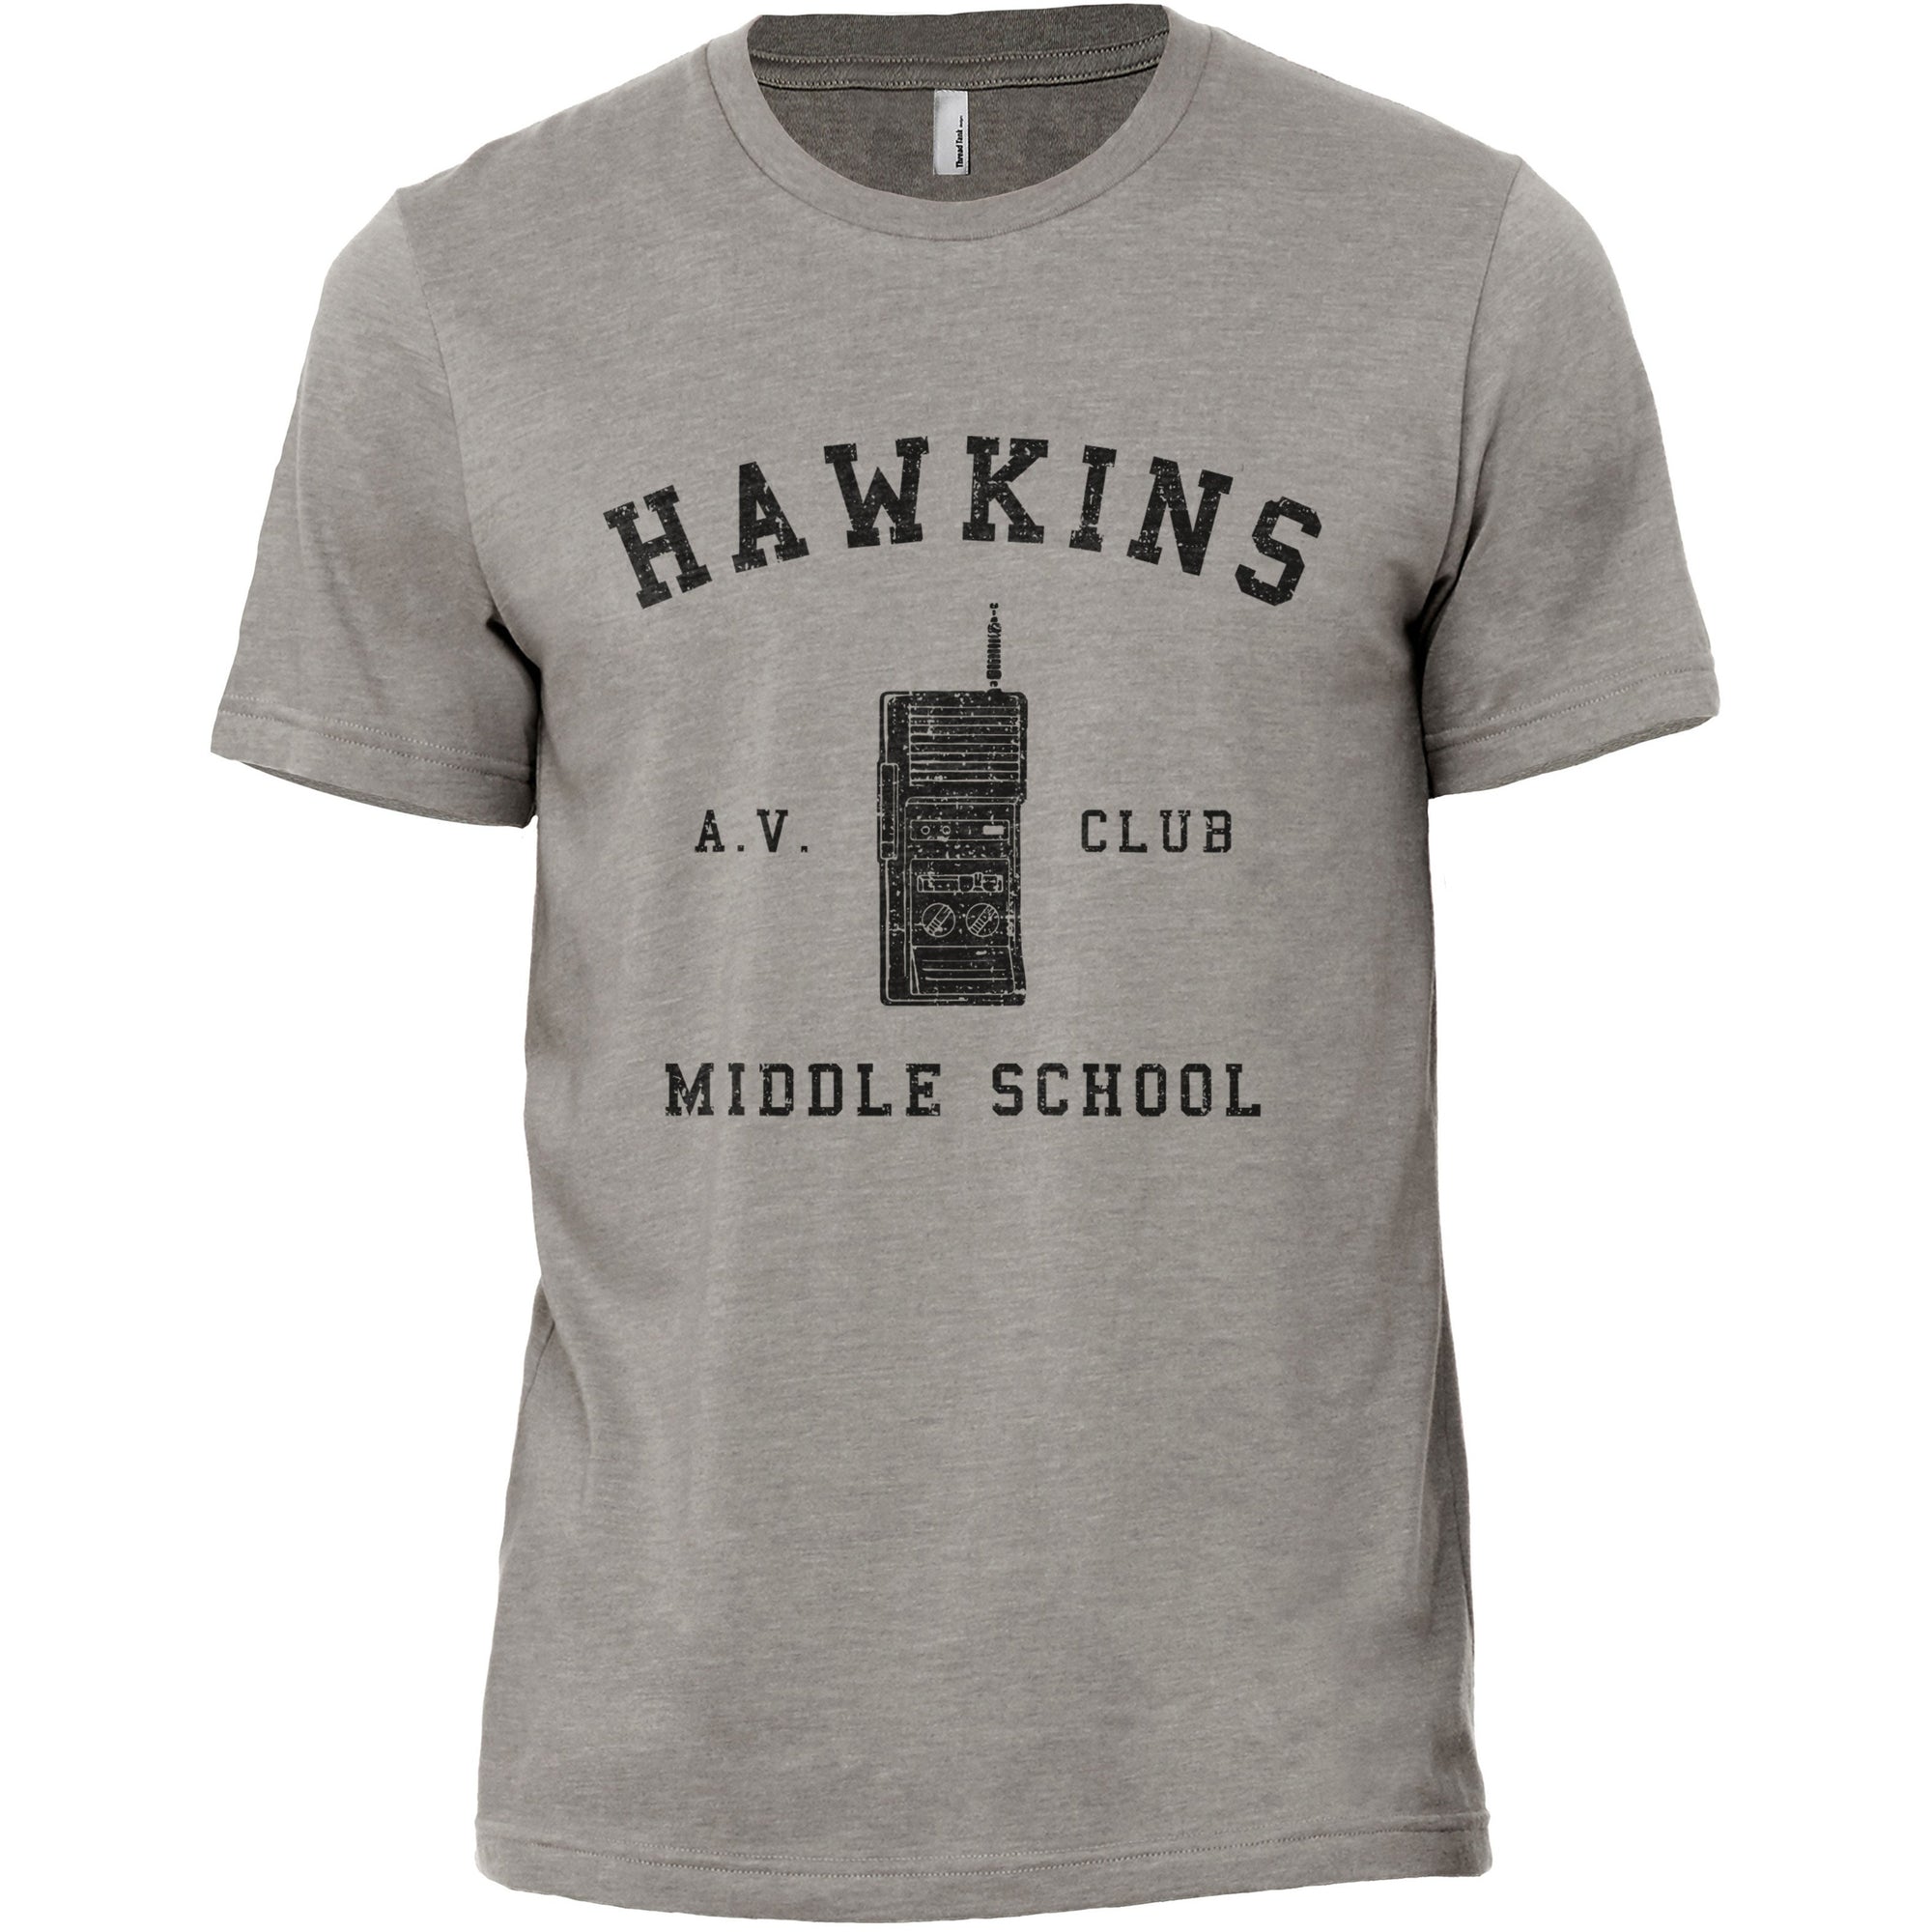 Hawkins Middle School Printed Graphic Men's Crew T-Shirt Heather Tan Main Image